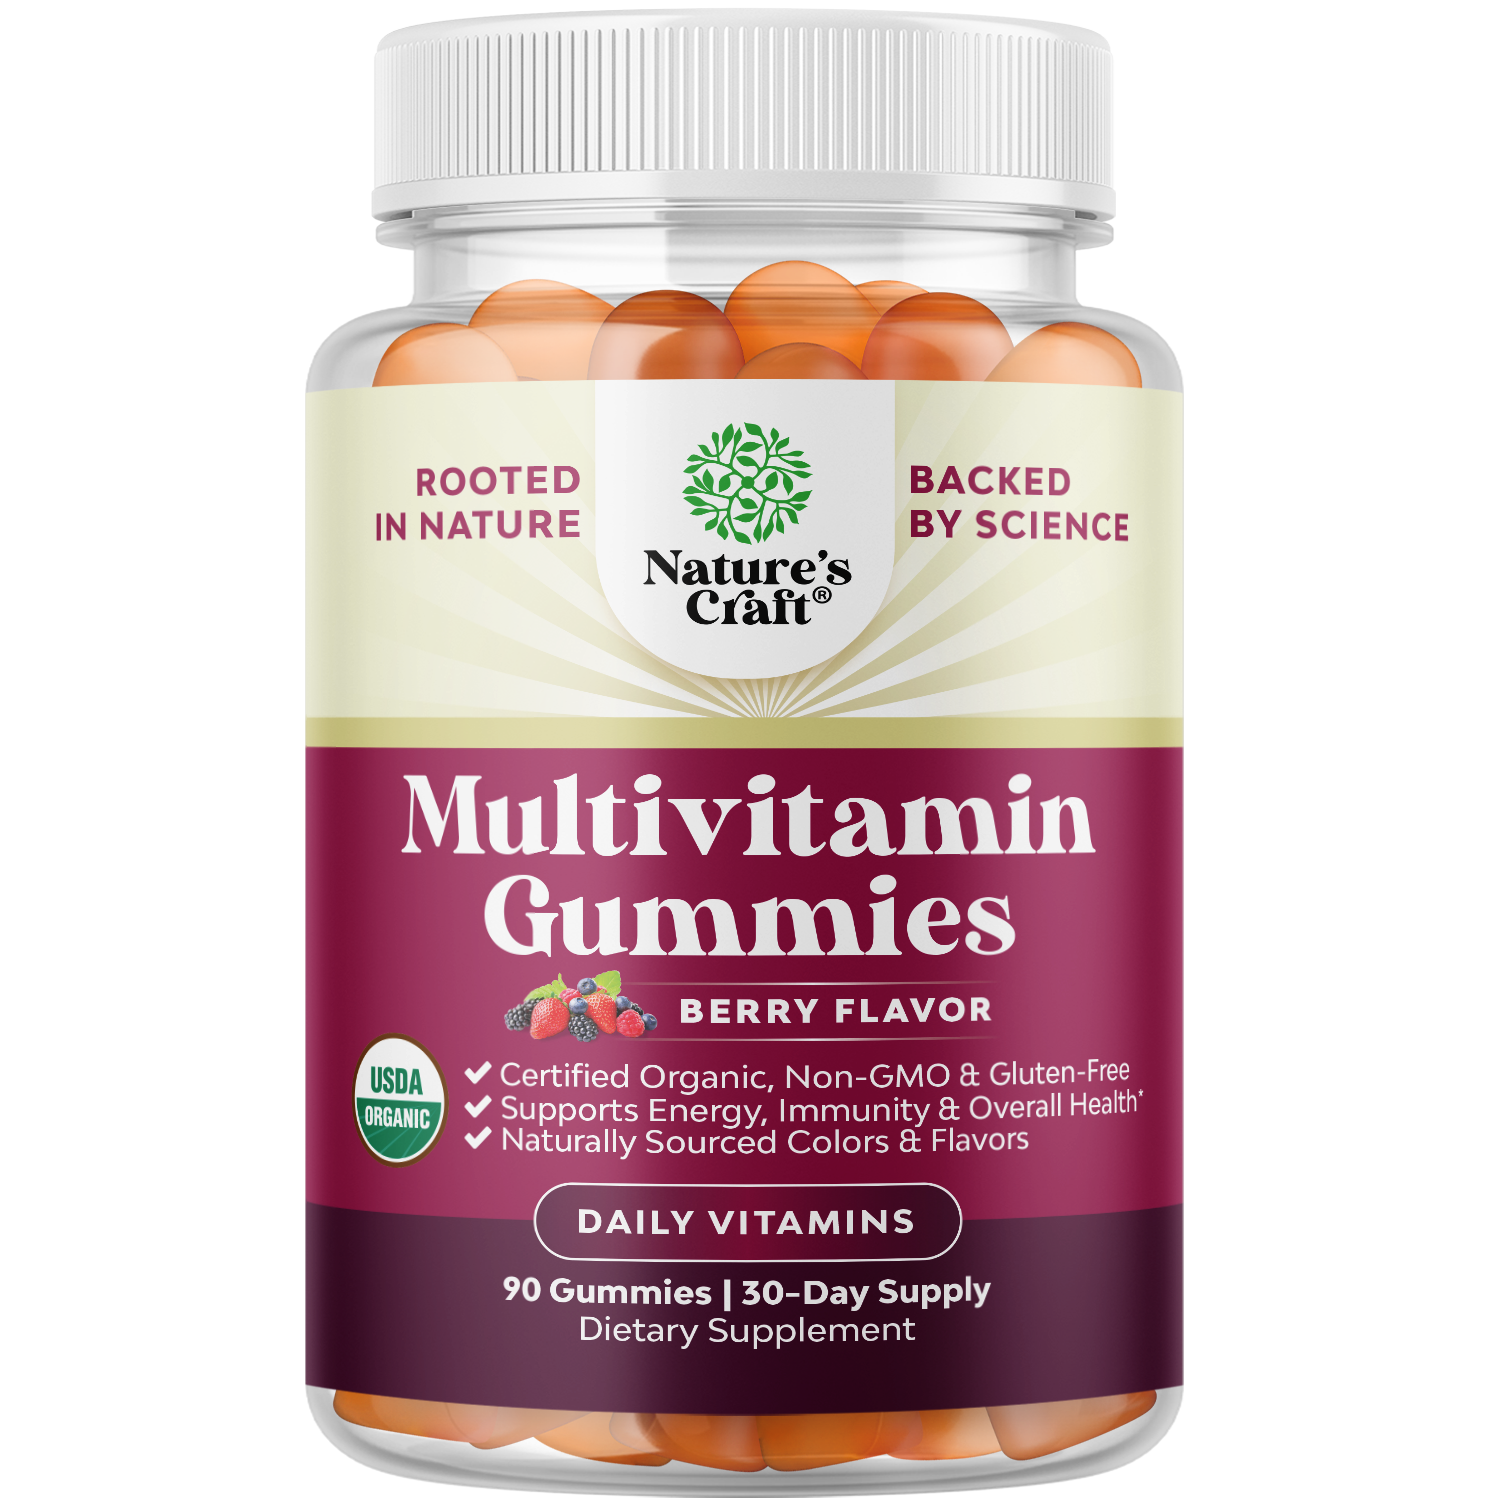 Multivitamin Gummies - 90 Gummies